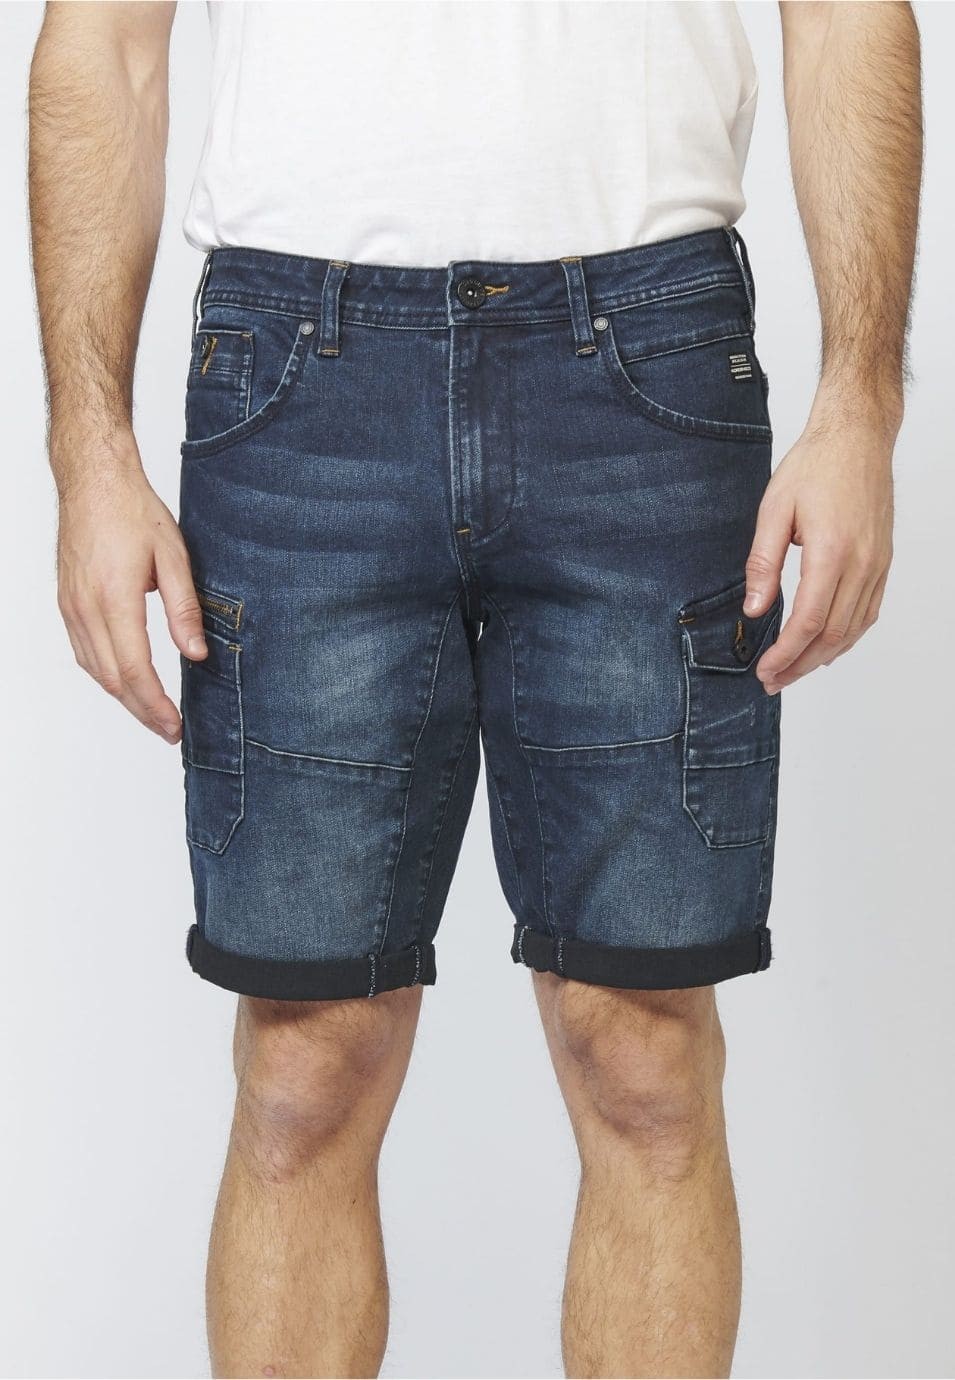 Pantalon corto denim cortes regular fit 4